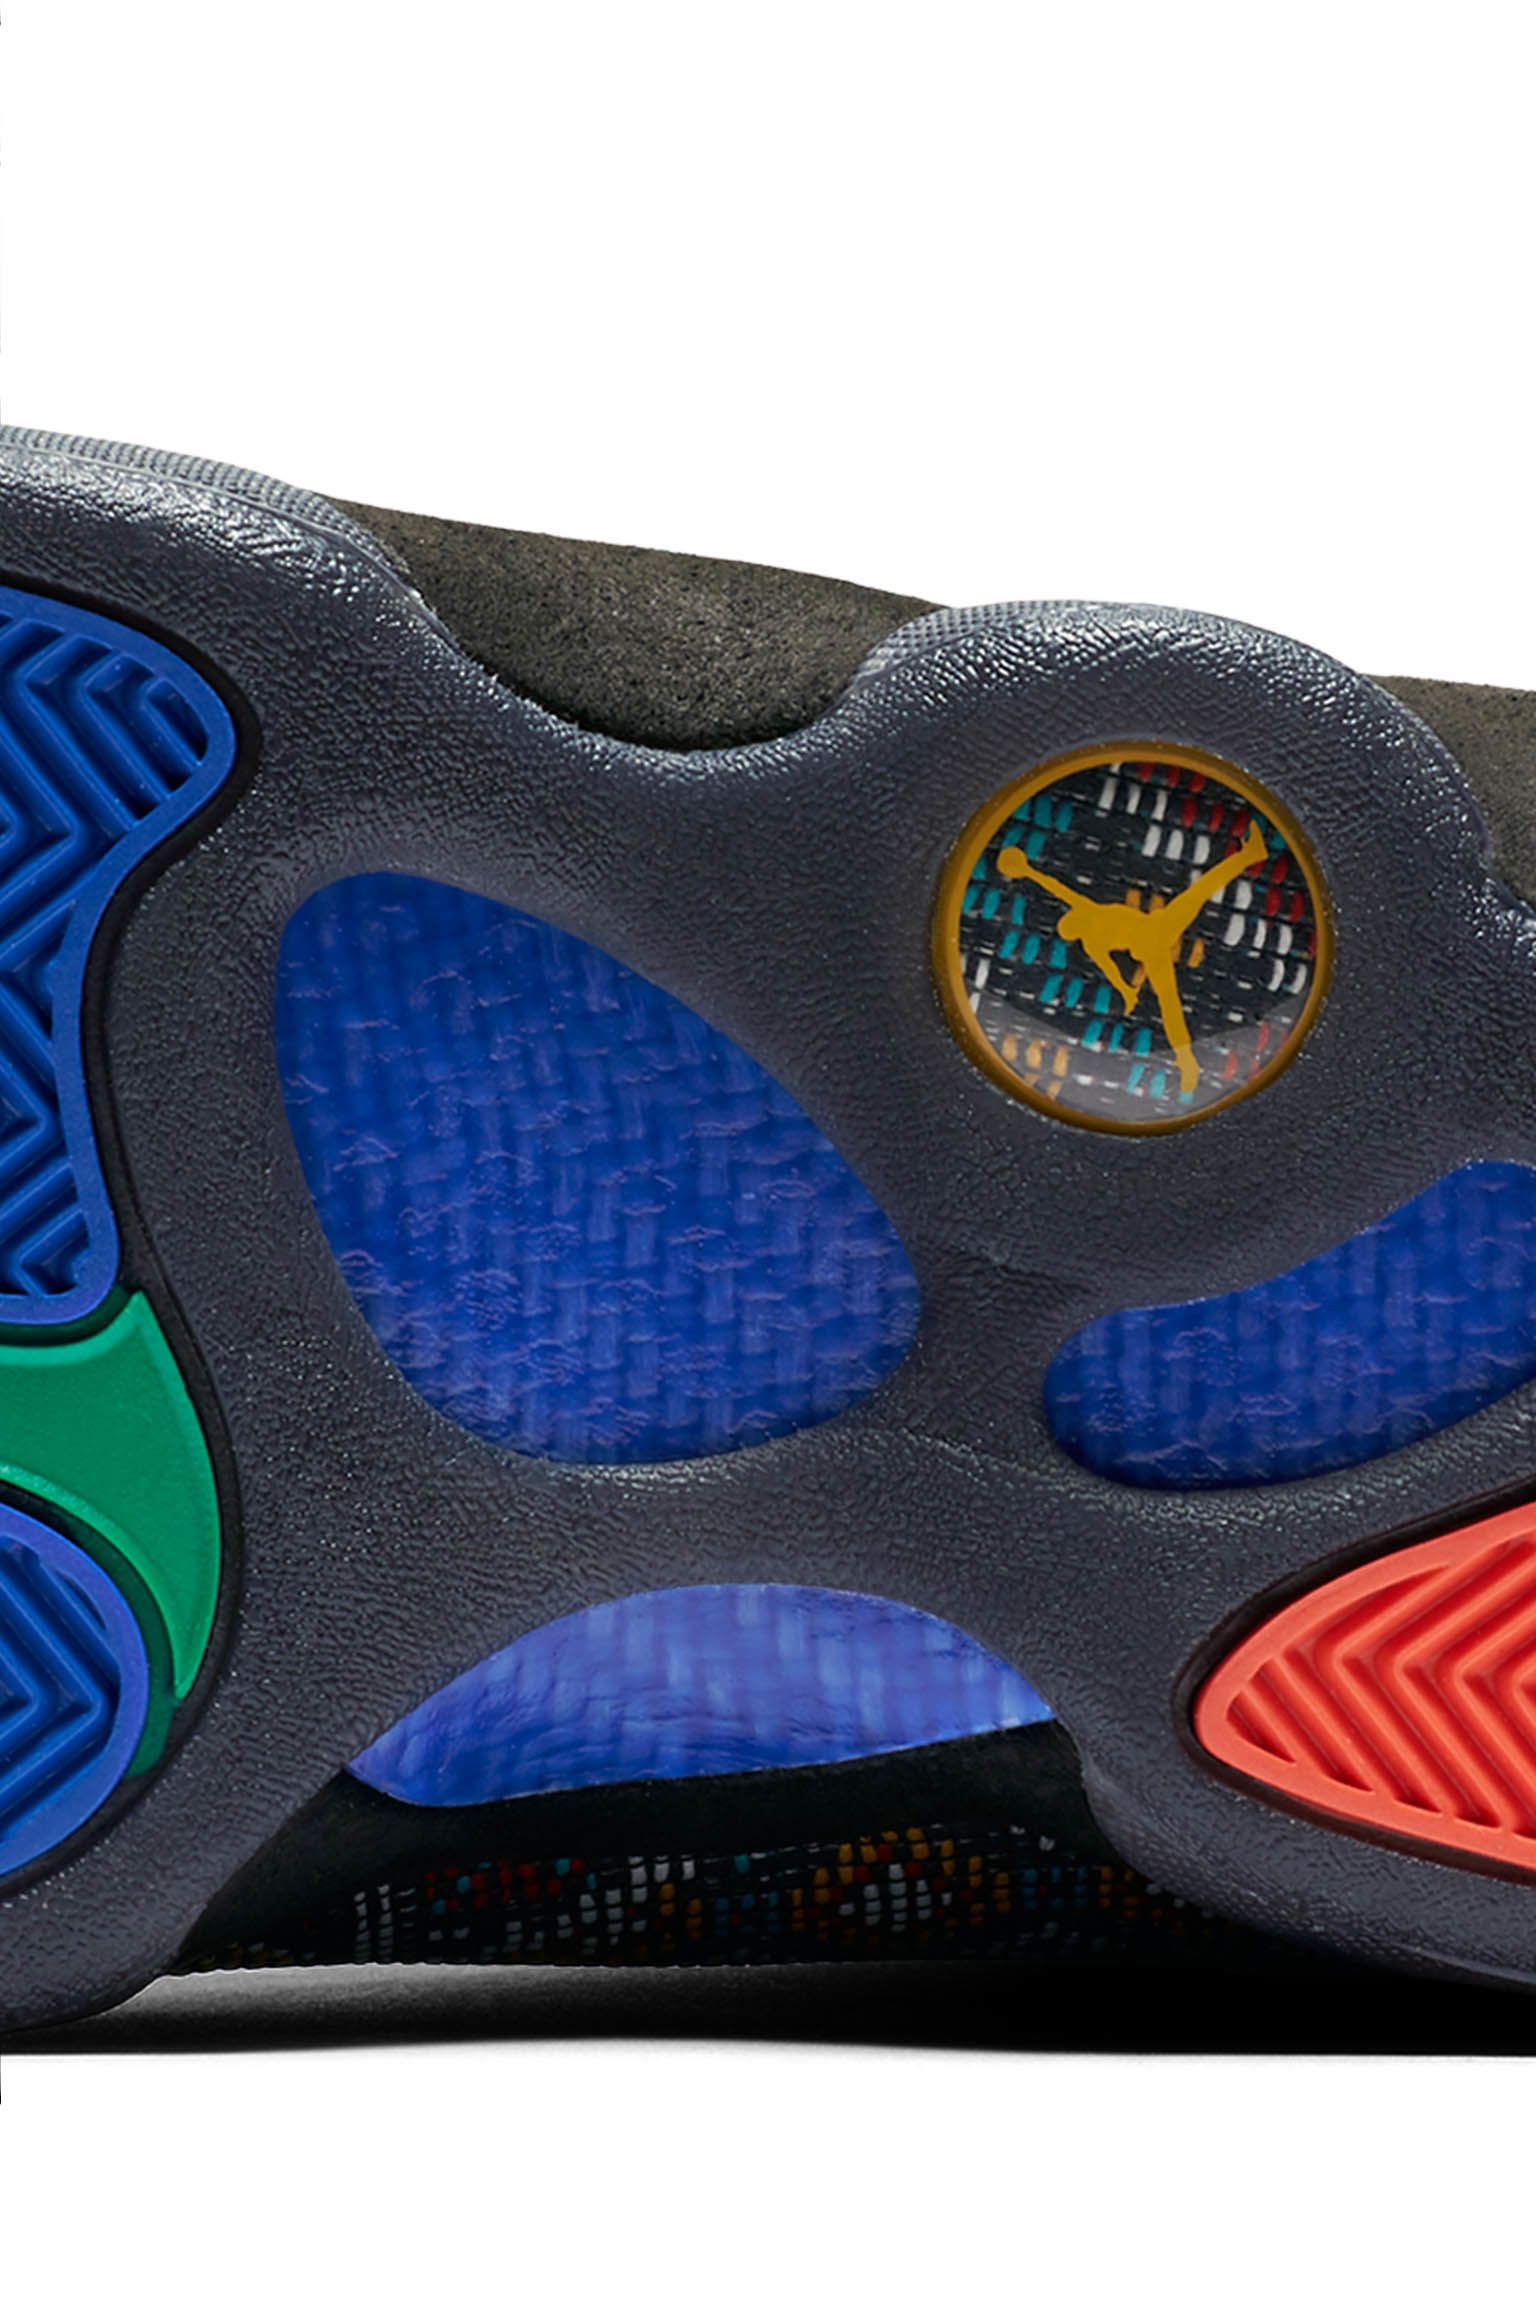 Jordan 'Black Multi-Color' Release Date. Nike SNKRS